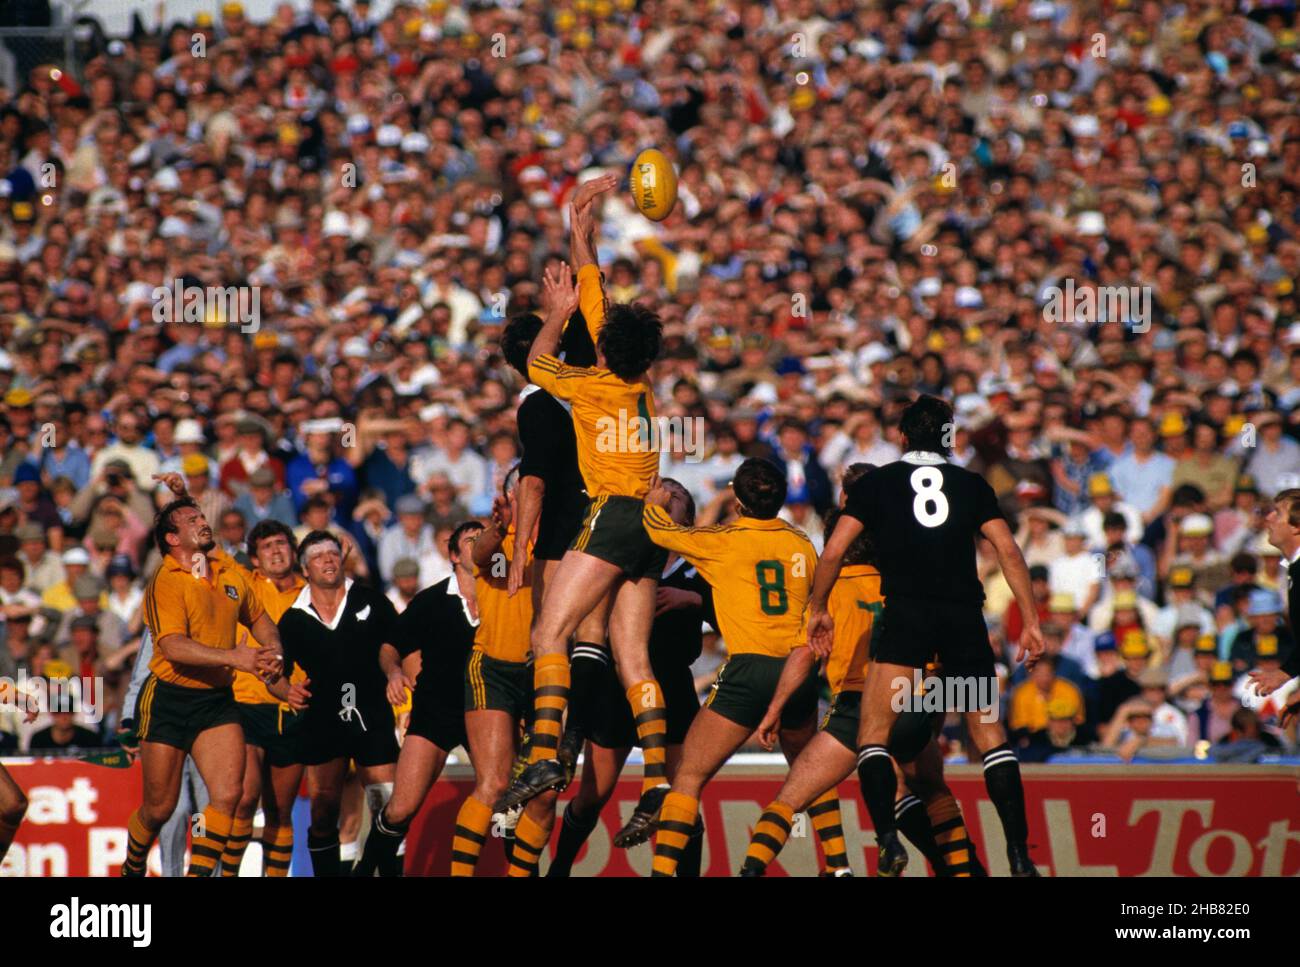 Rugby Union Football. New Zealand All Blacks against Australian Wallabies. Stock Photo